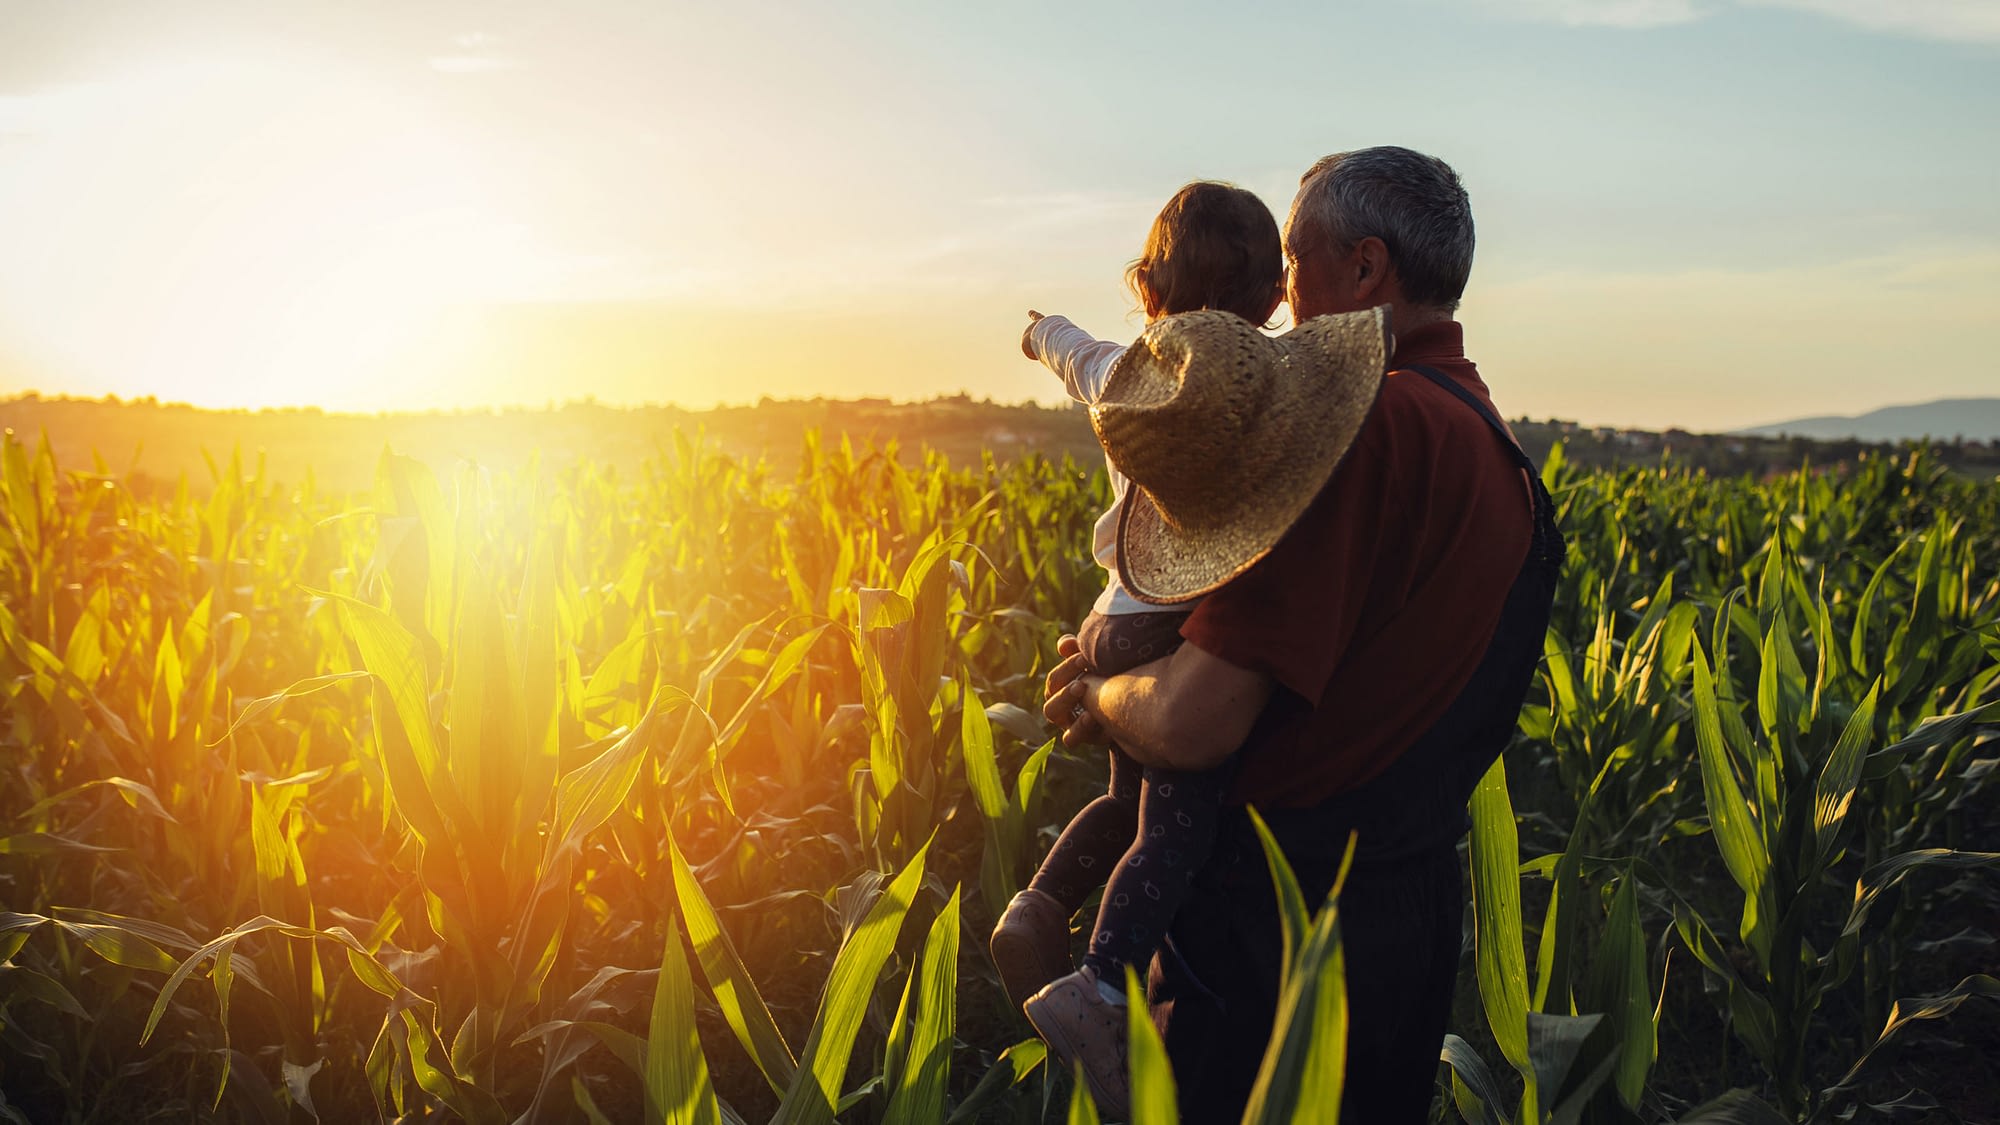 Farmer with grandchild in corn field watching the sunrise.